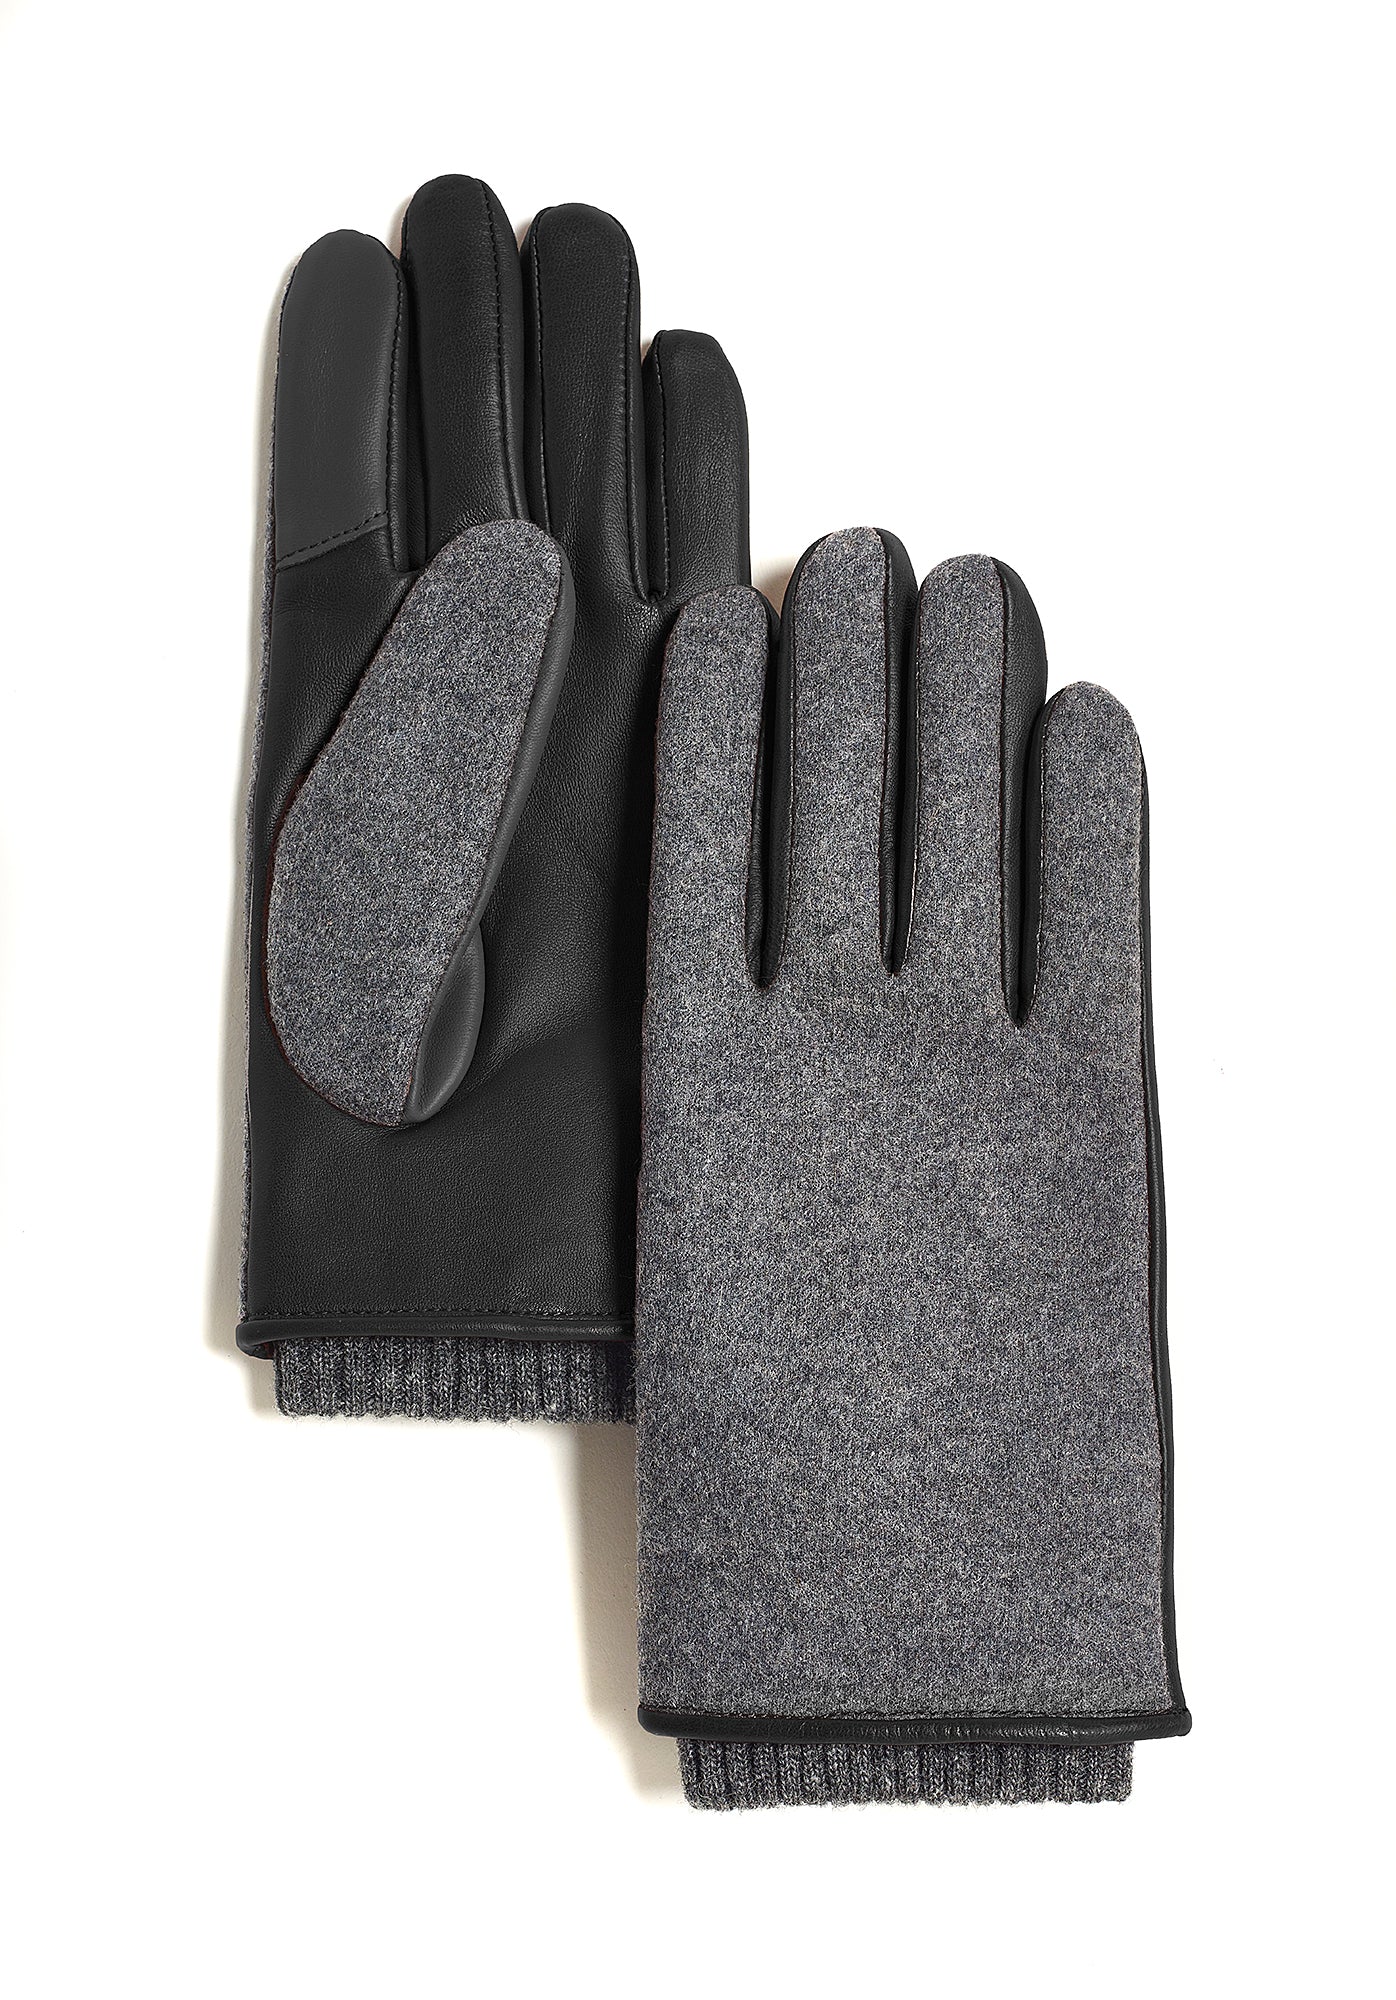 The Mirabel Glove